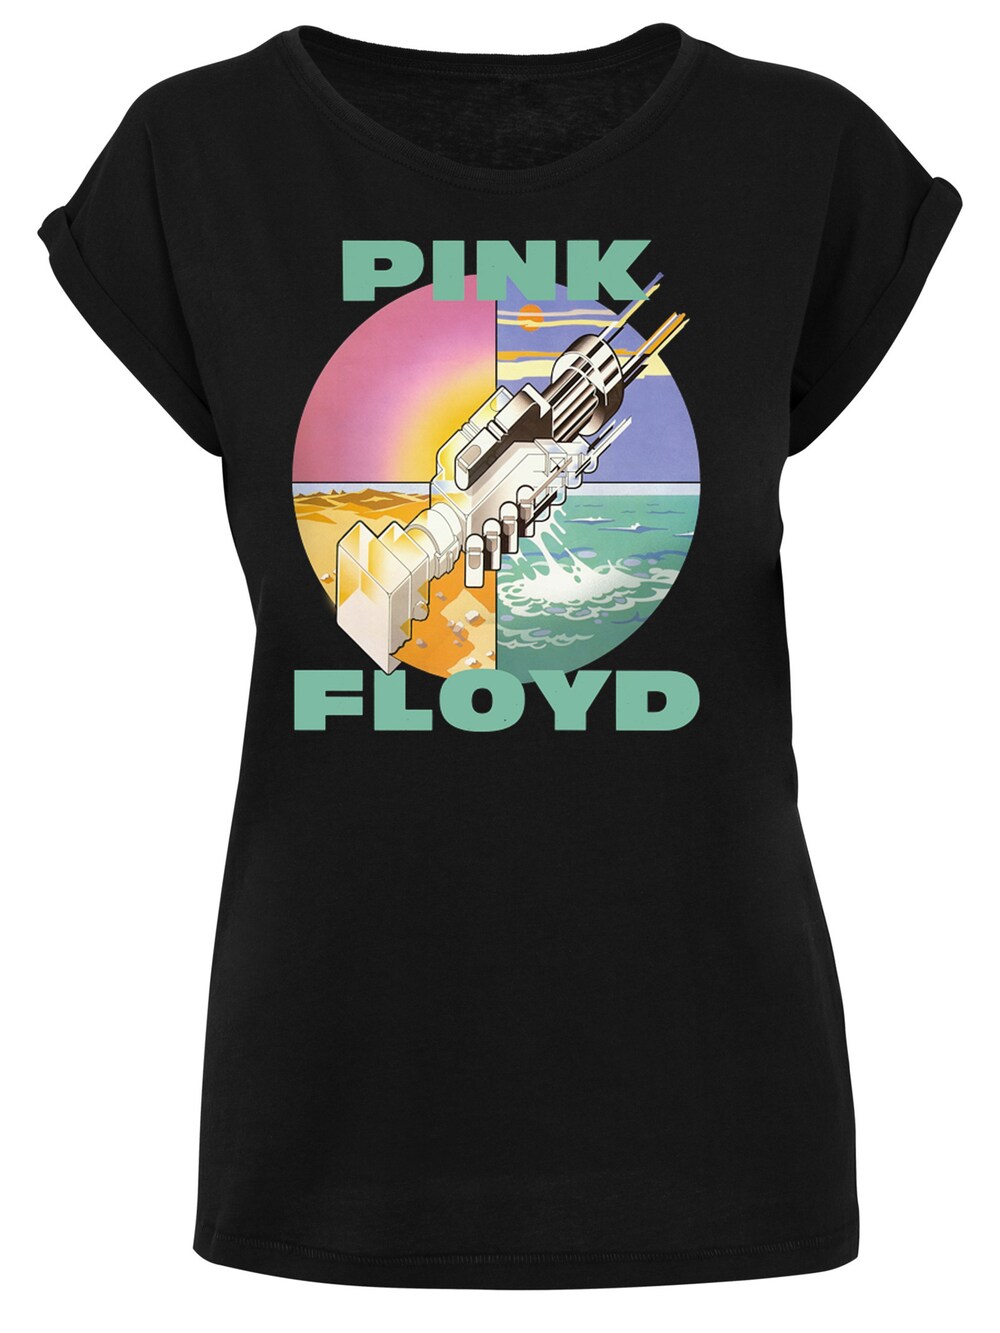 Рубашка F4Nt4Stic Pink Floyd Wish You Were Here, черный cd диск wish you were here pink floyd